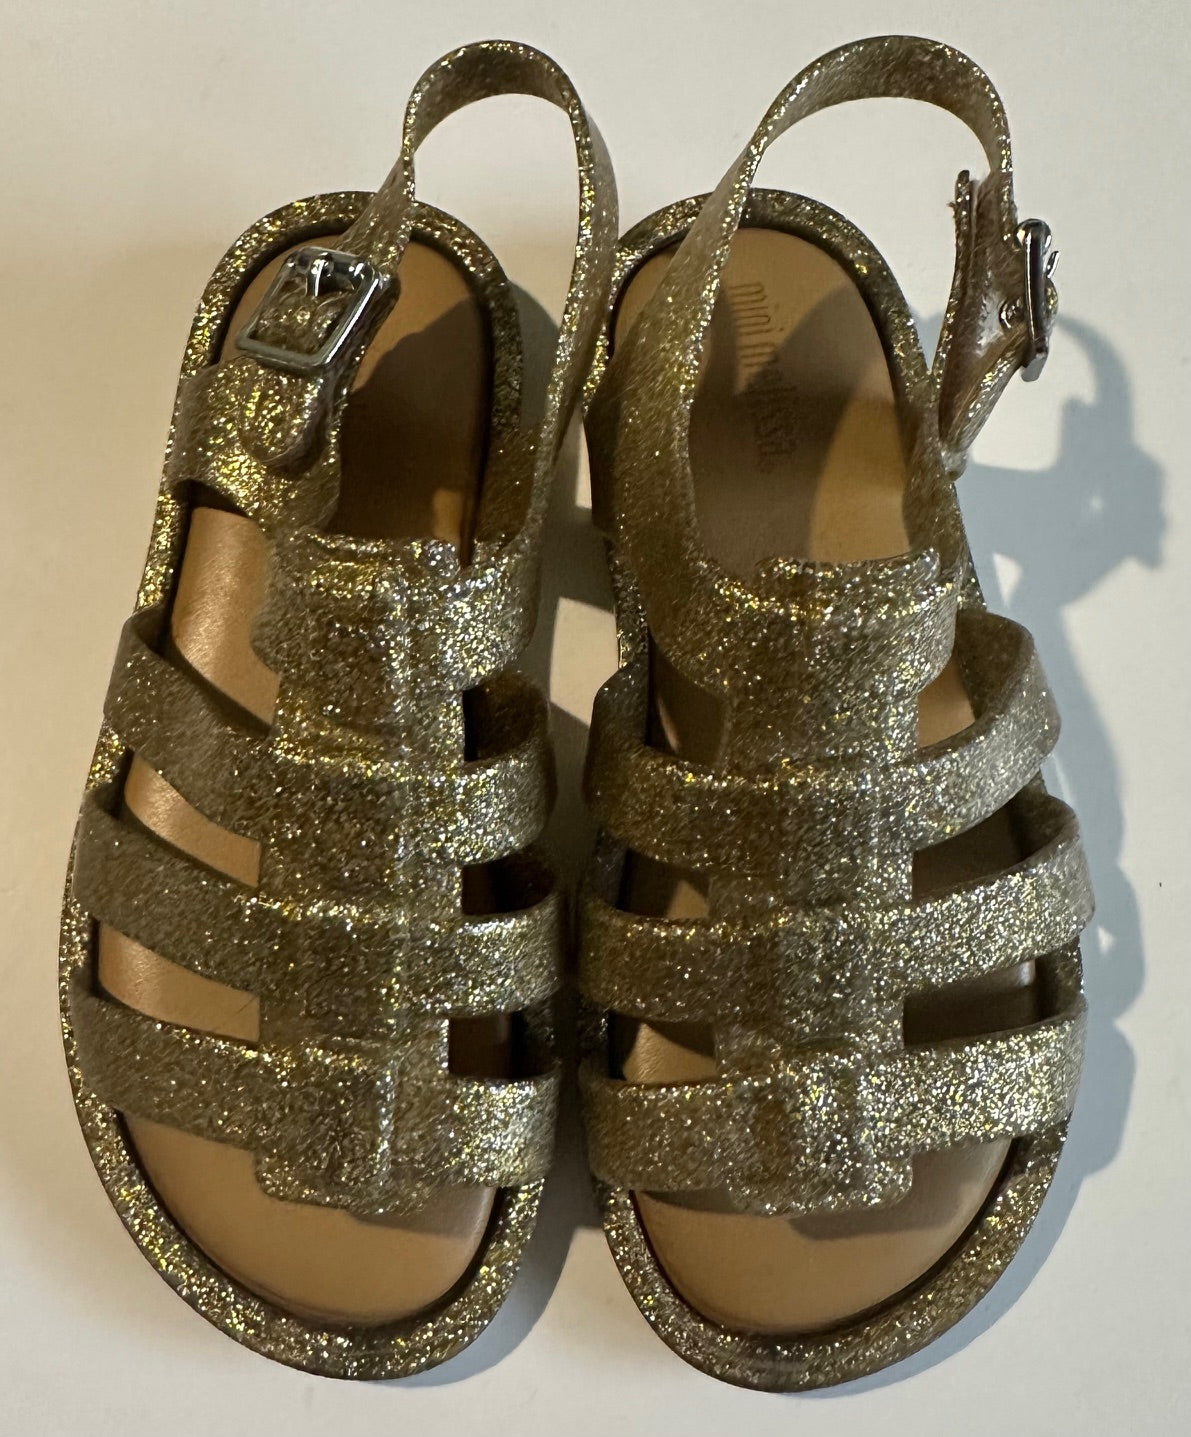 Mini Melissa, Sparkly Gold Sandals - Size 10T